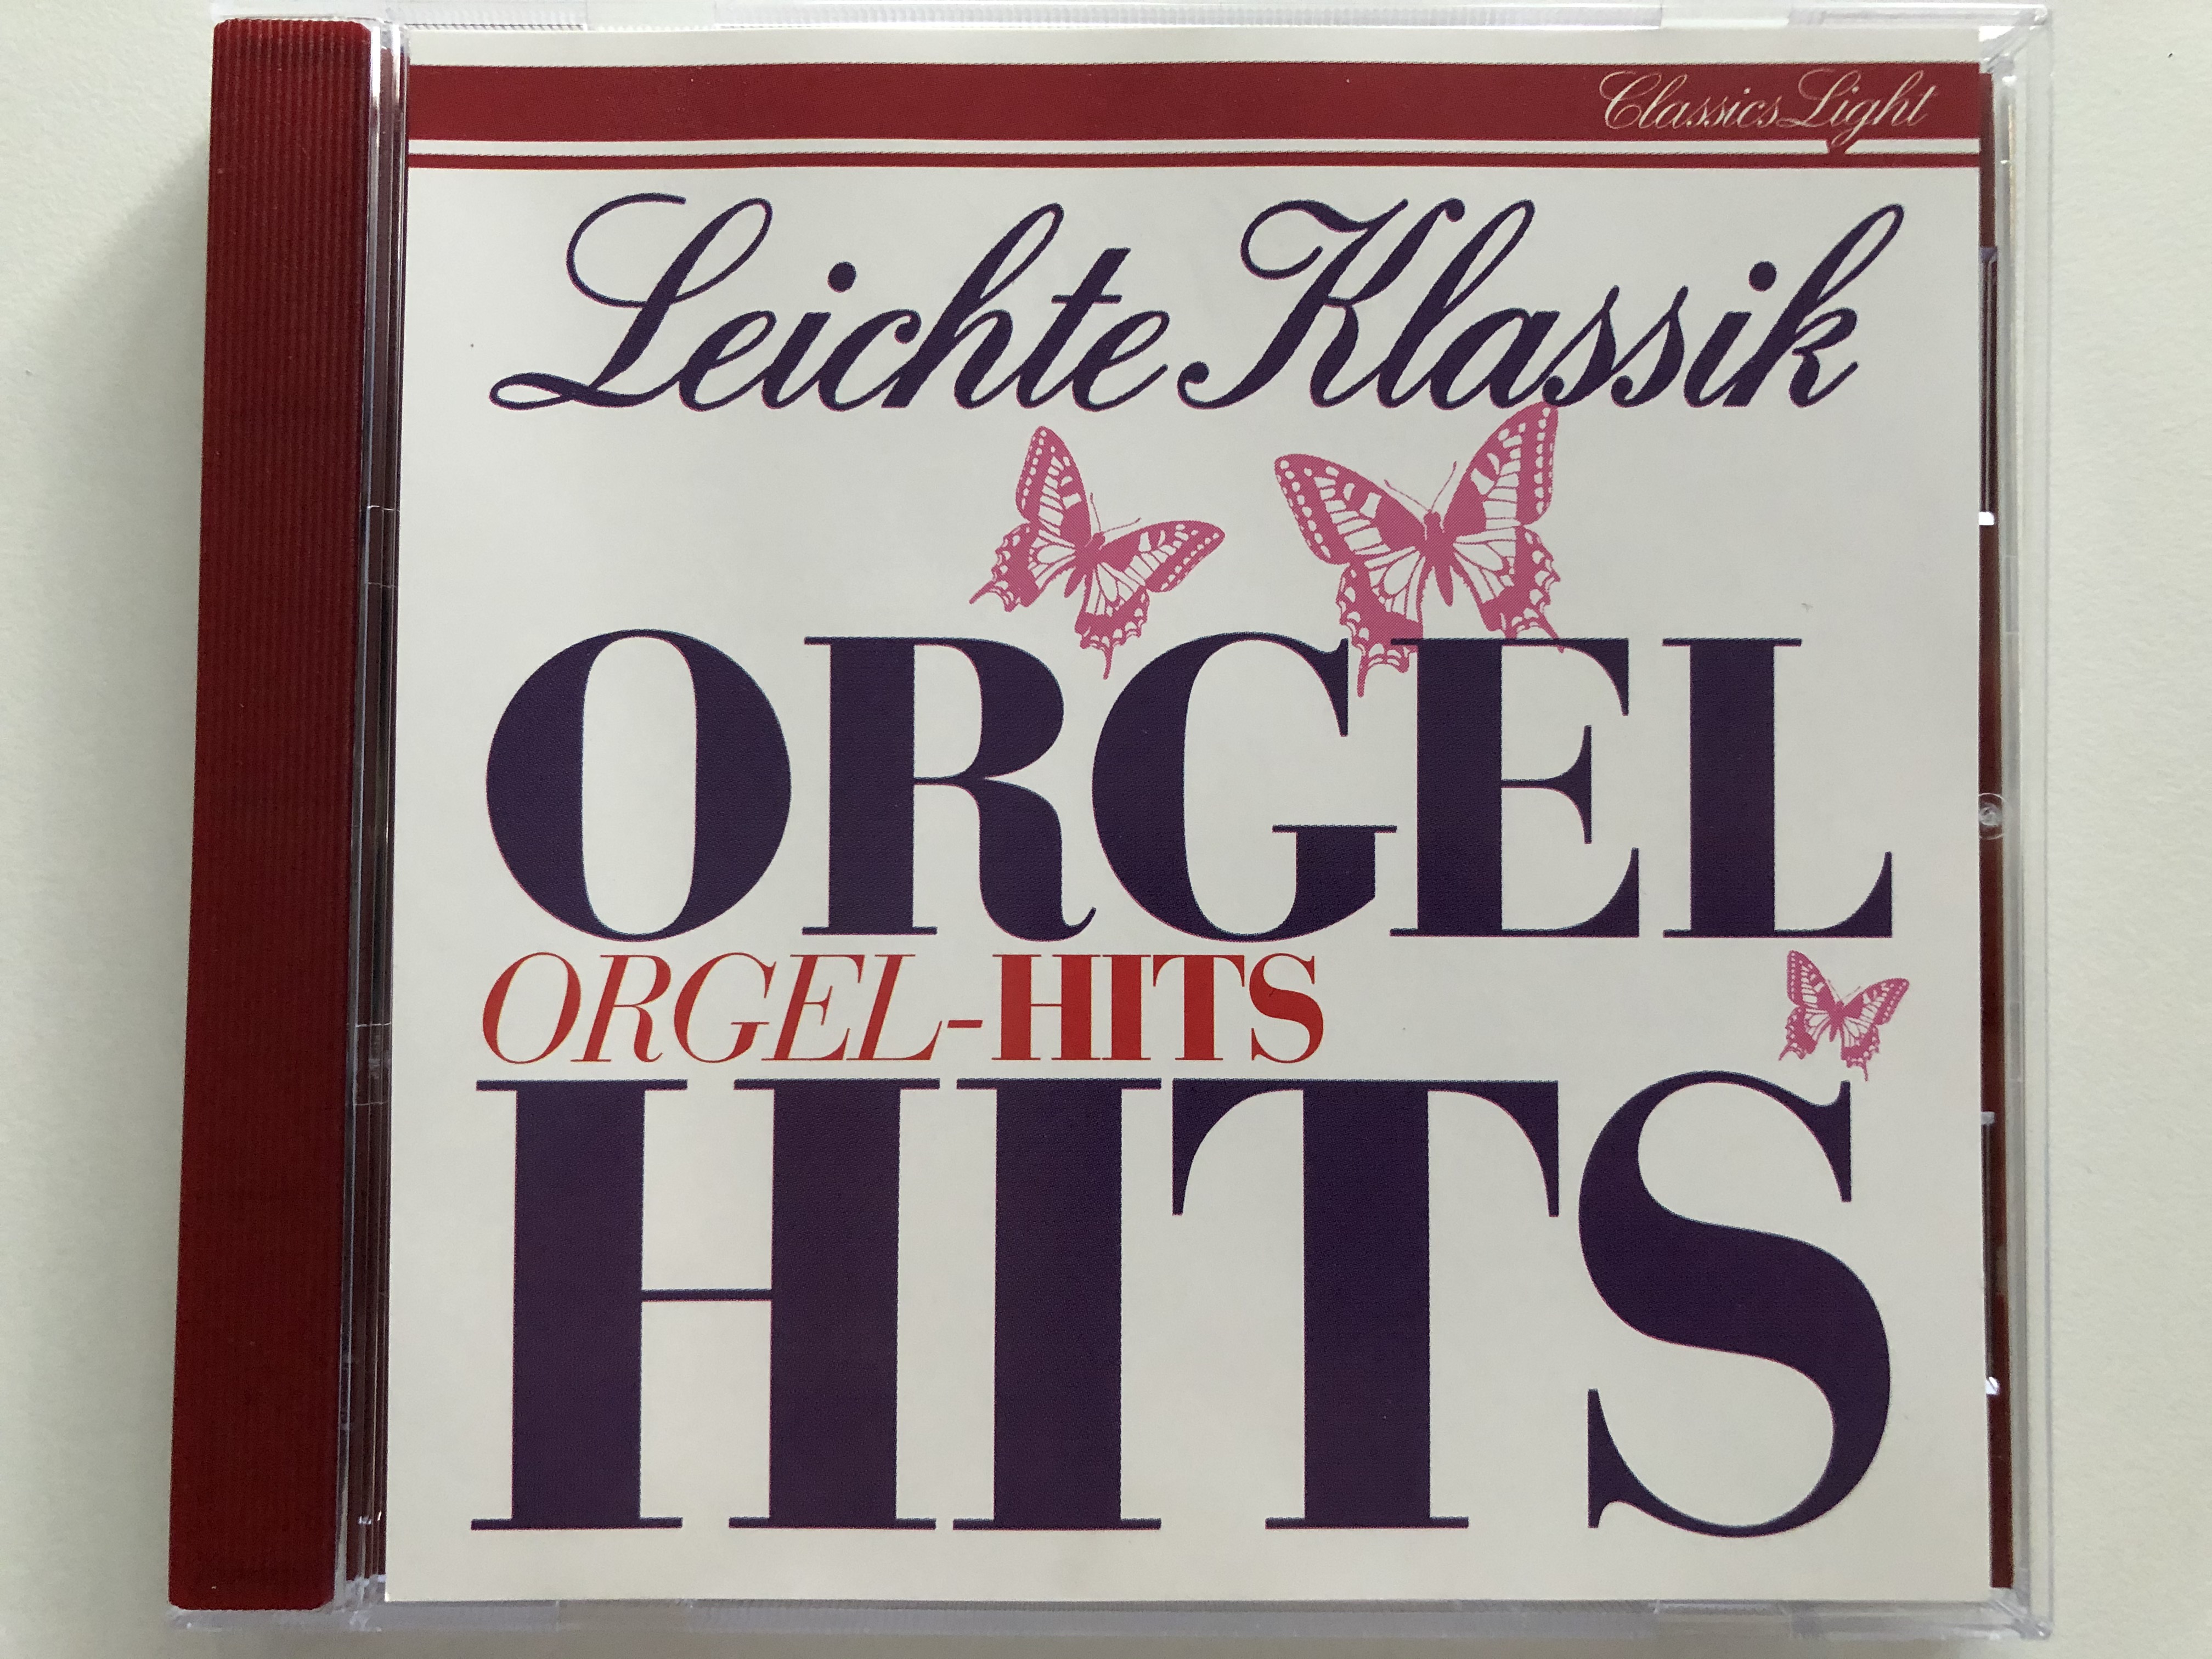 leichte-klassik-orgel-hits-philips-classics-productions-audio-cd-stereo-442-714-2-1-.jpg